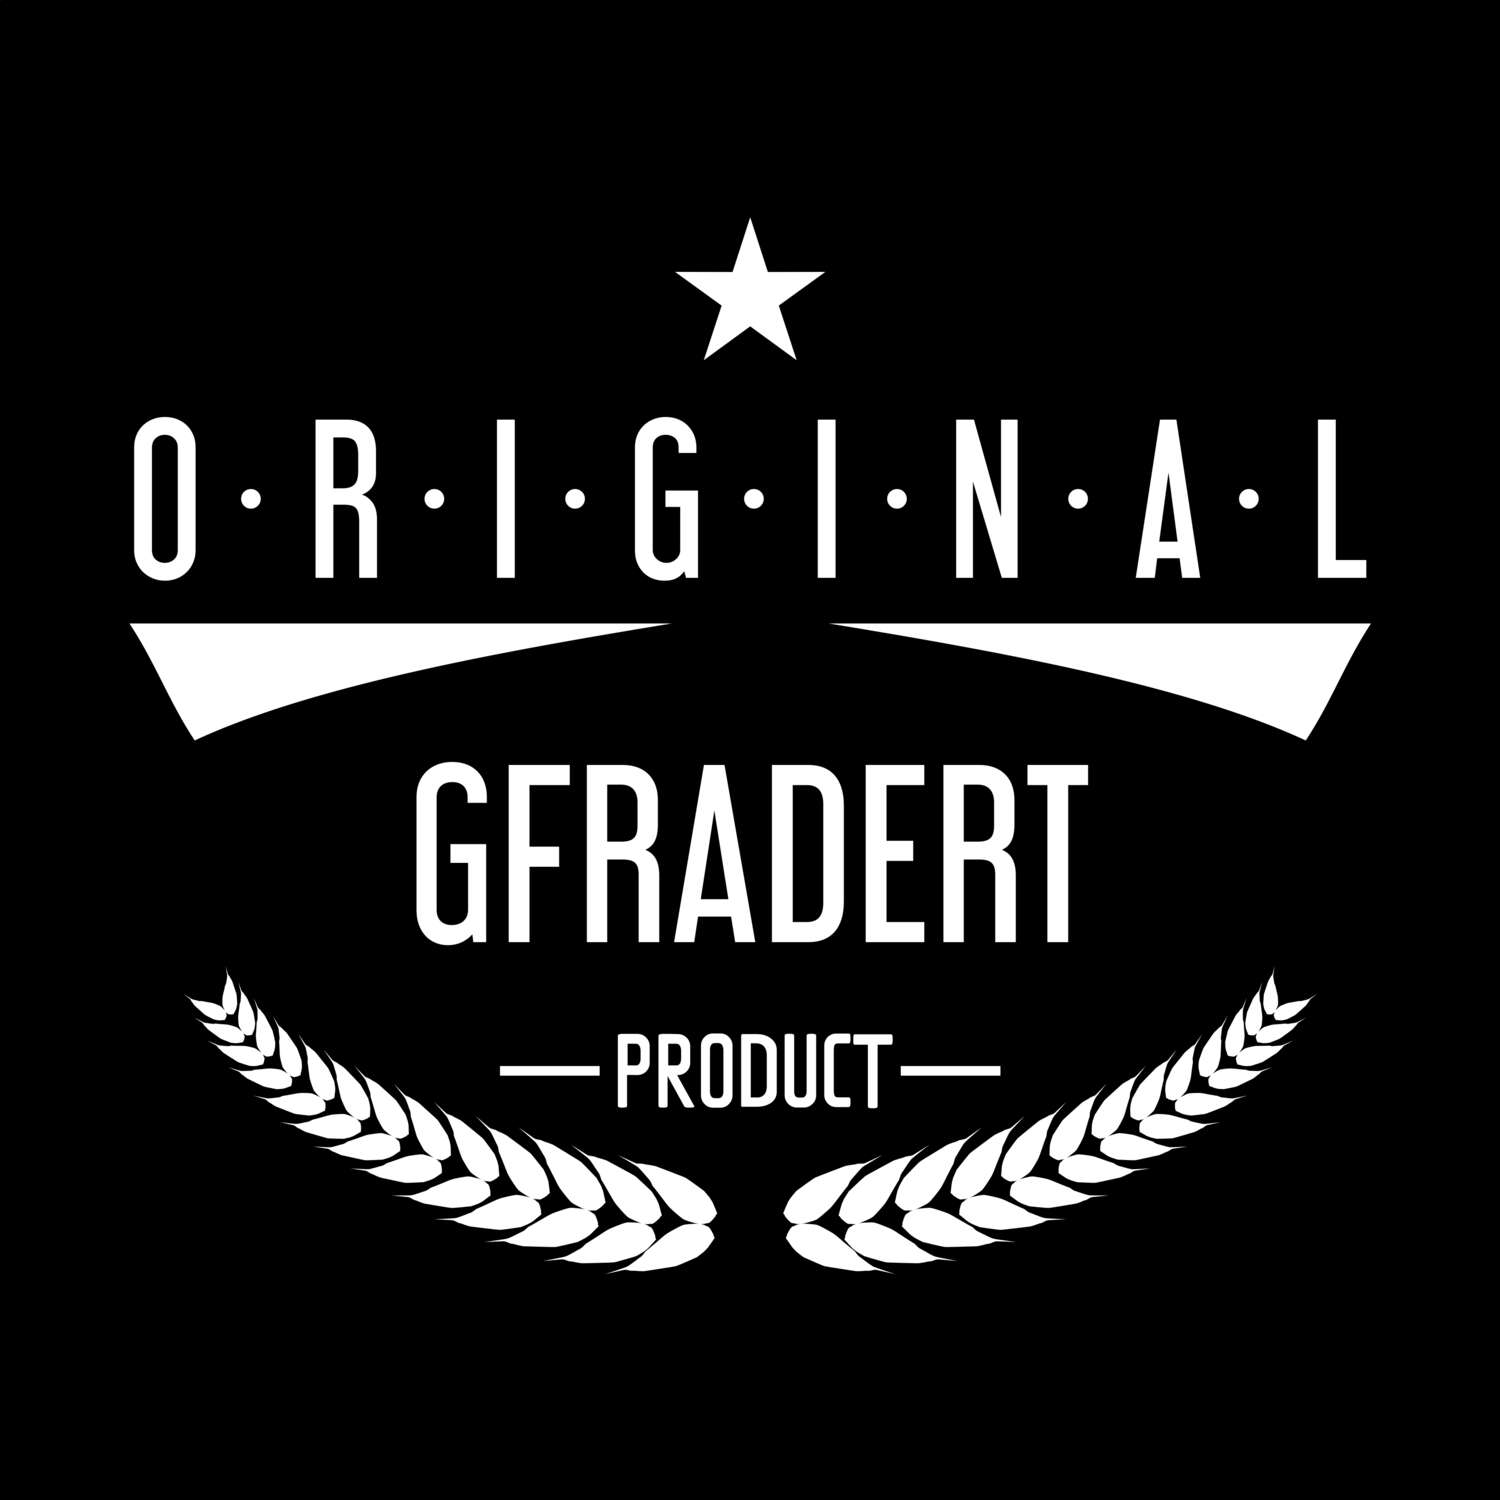 Gfradert T-Shirt »Original Product«